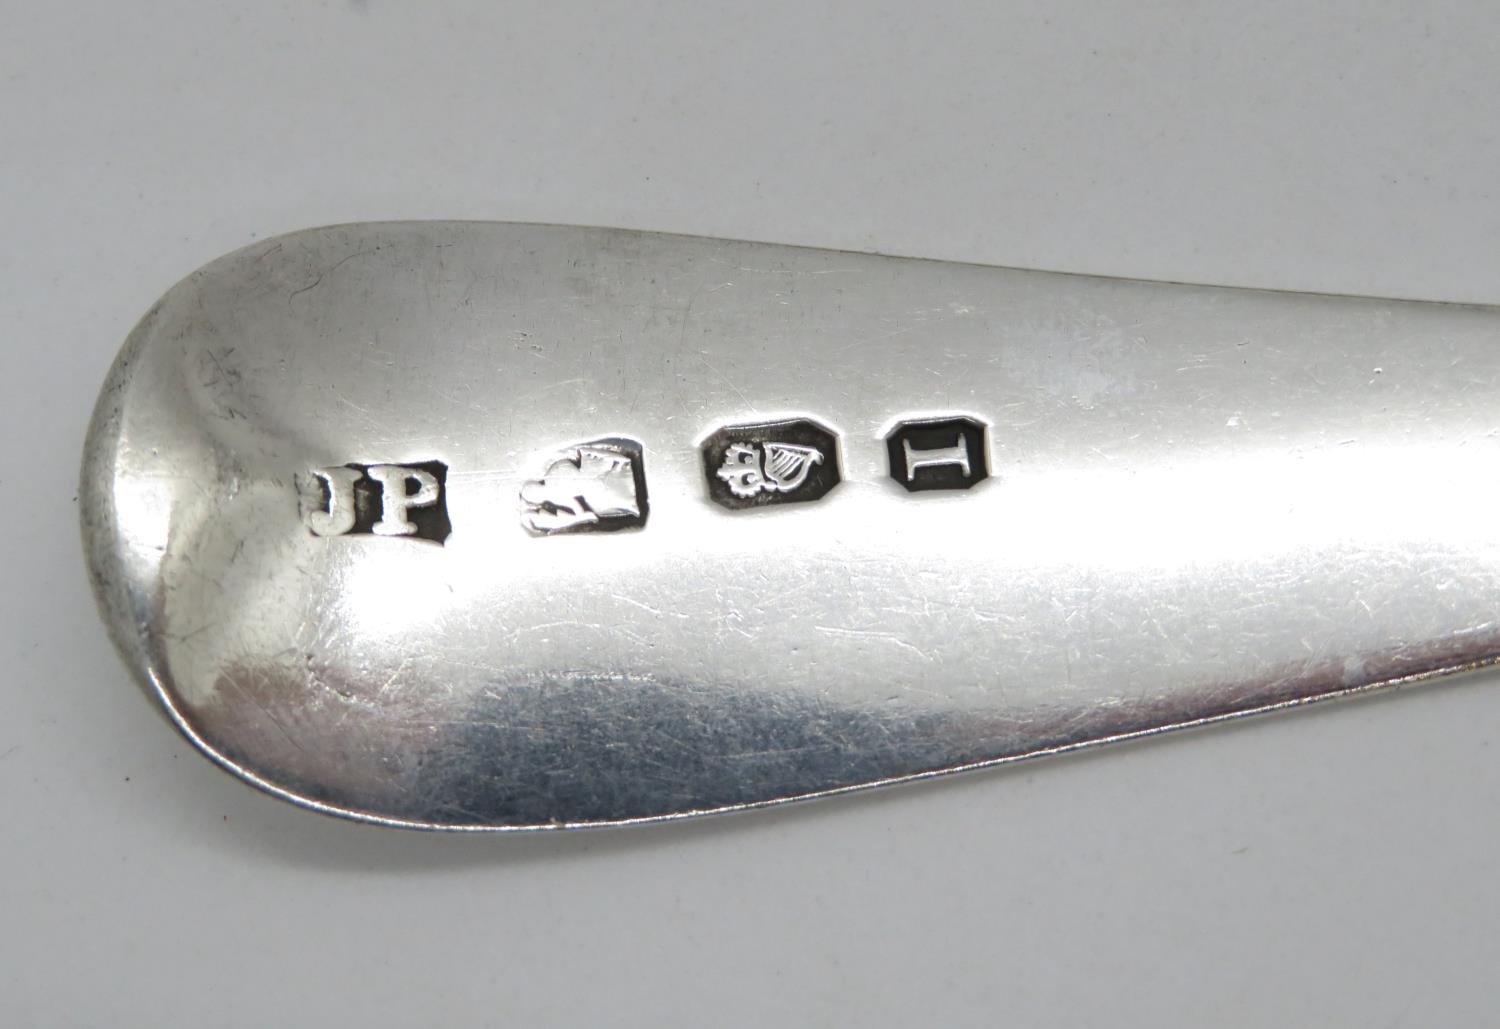 2x antique Irish silver serving spoons - 1x maker John Power Dublin 1805. and 1x Samuel Neville - Image 2 of 2